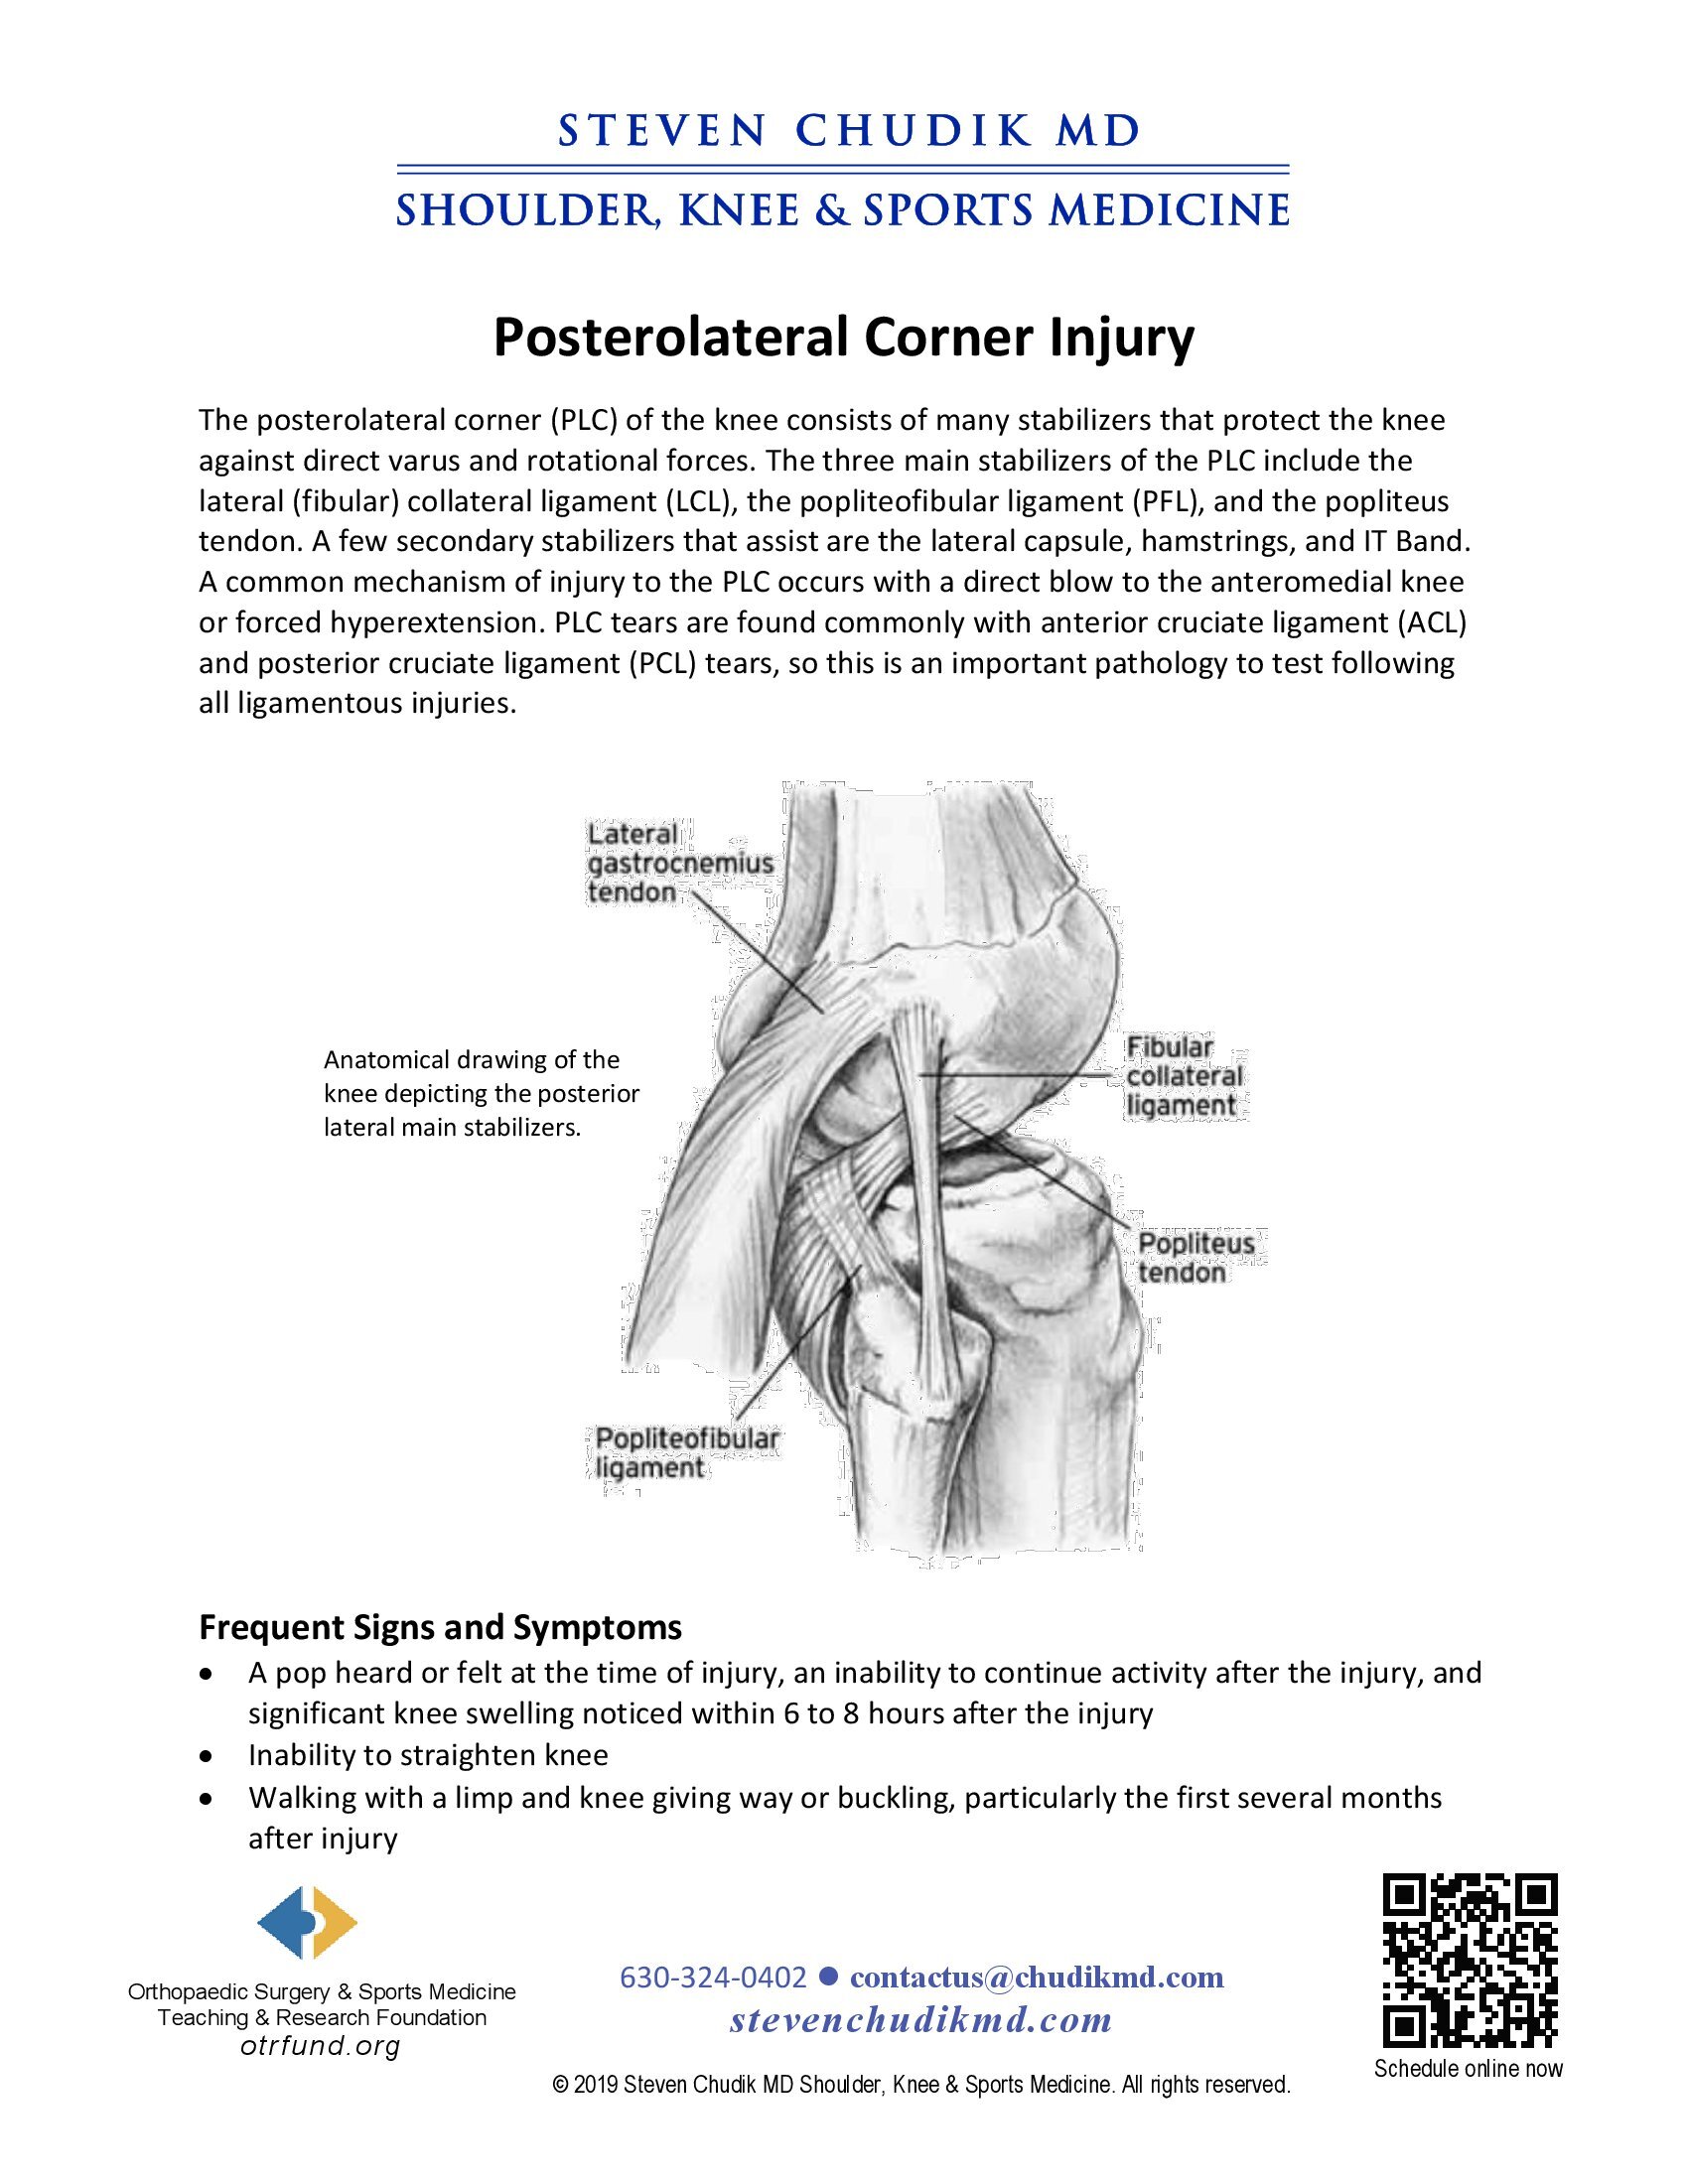 Posterolateral corner (PCL) injuries - Steven Chudik MD